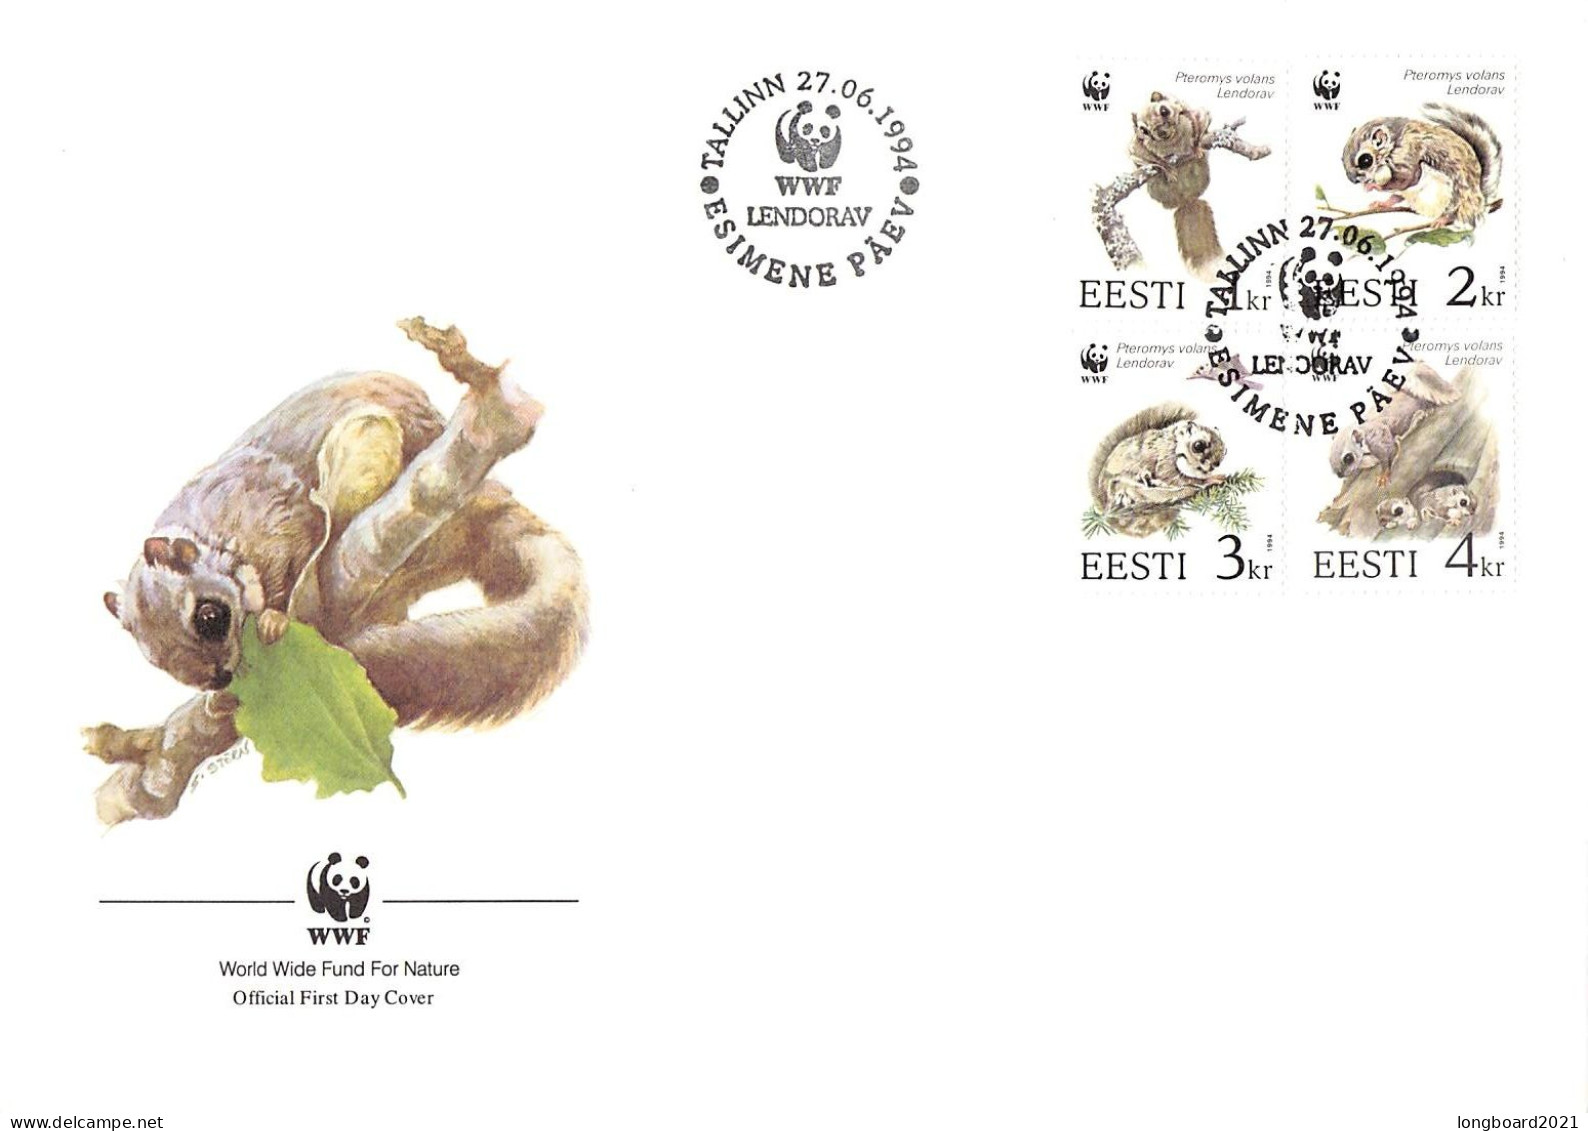 ESTONIA - FDC WWF 1994 - SQUIRREL / 4245 - Estonia